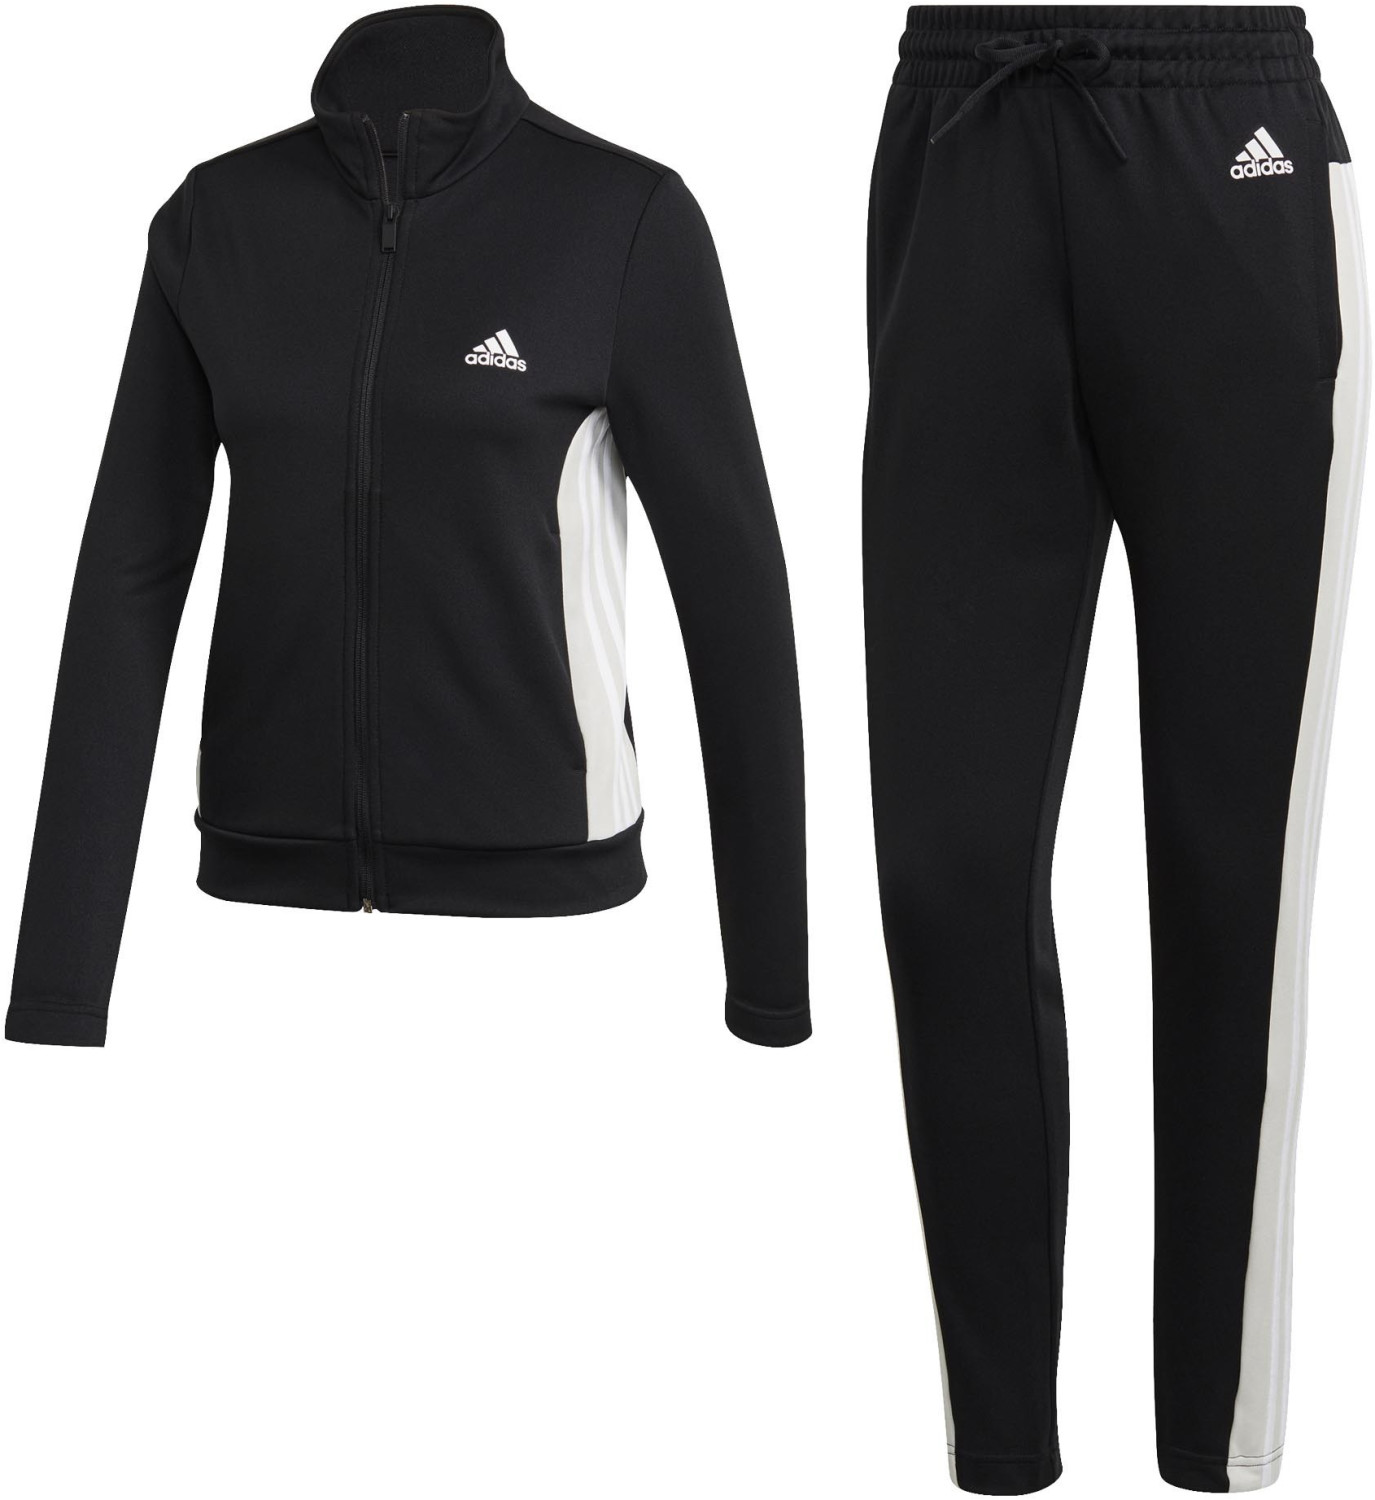 Buy Adidas Team Sport Tracksuit Women Blackblack From £5292 Today Best Deals On Uk 5021